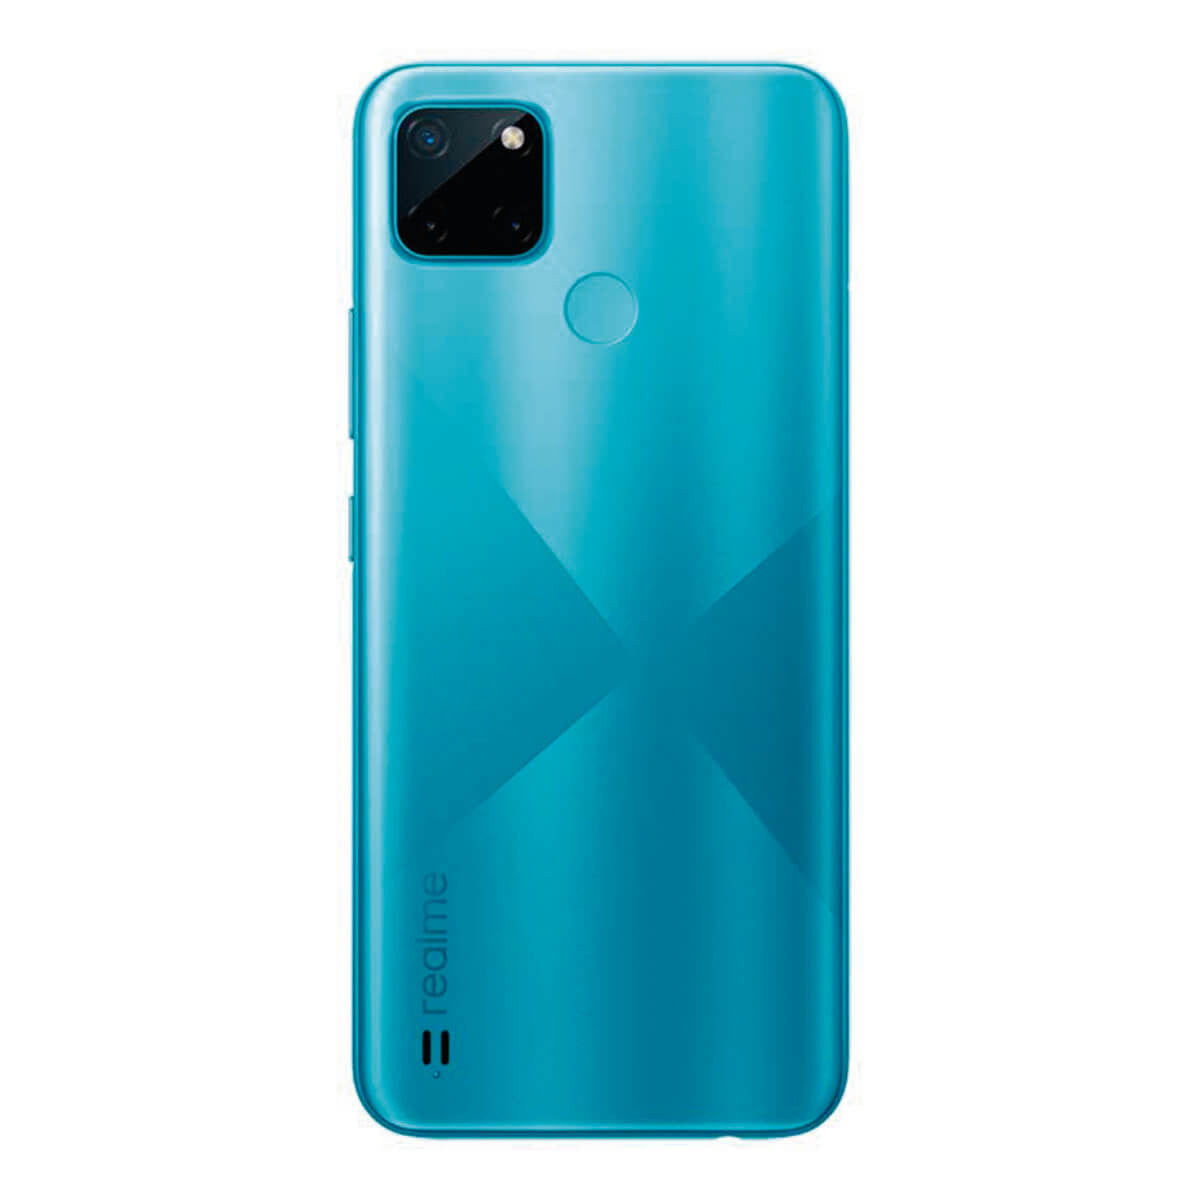 Realme C21-Y 4GB/64GB Blue (Cross Blue) Dual SIM RMX3263 Smartphone | Realme